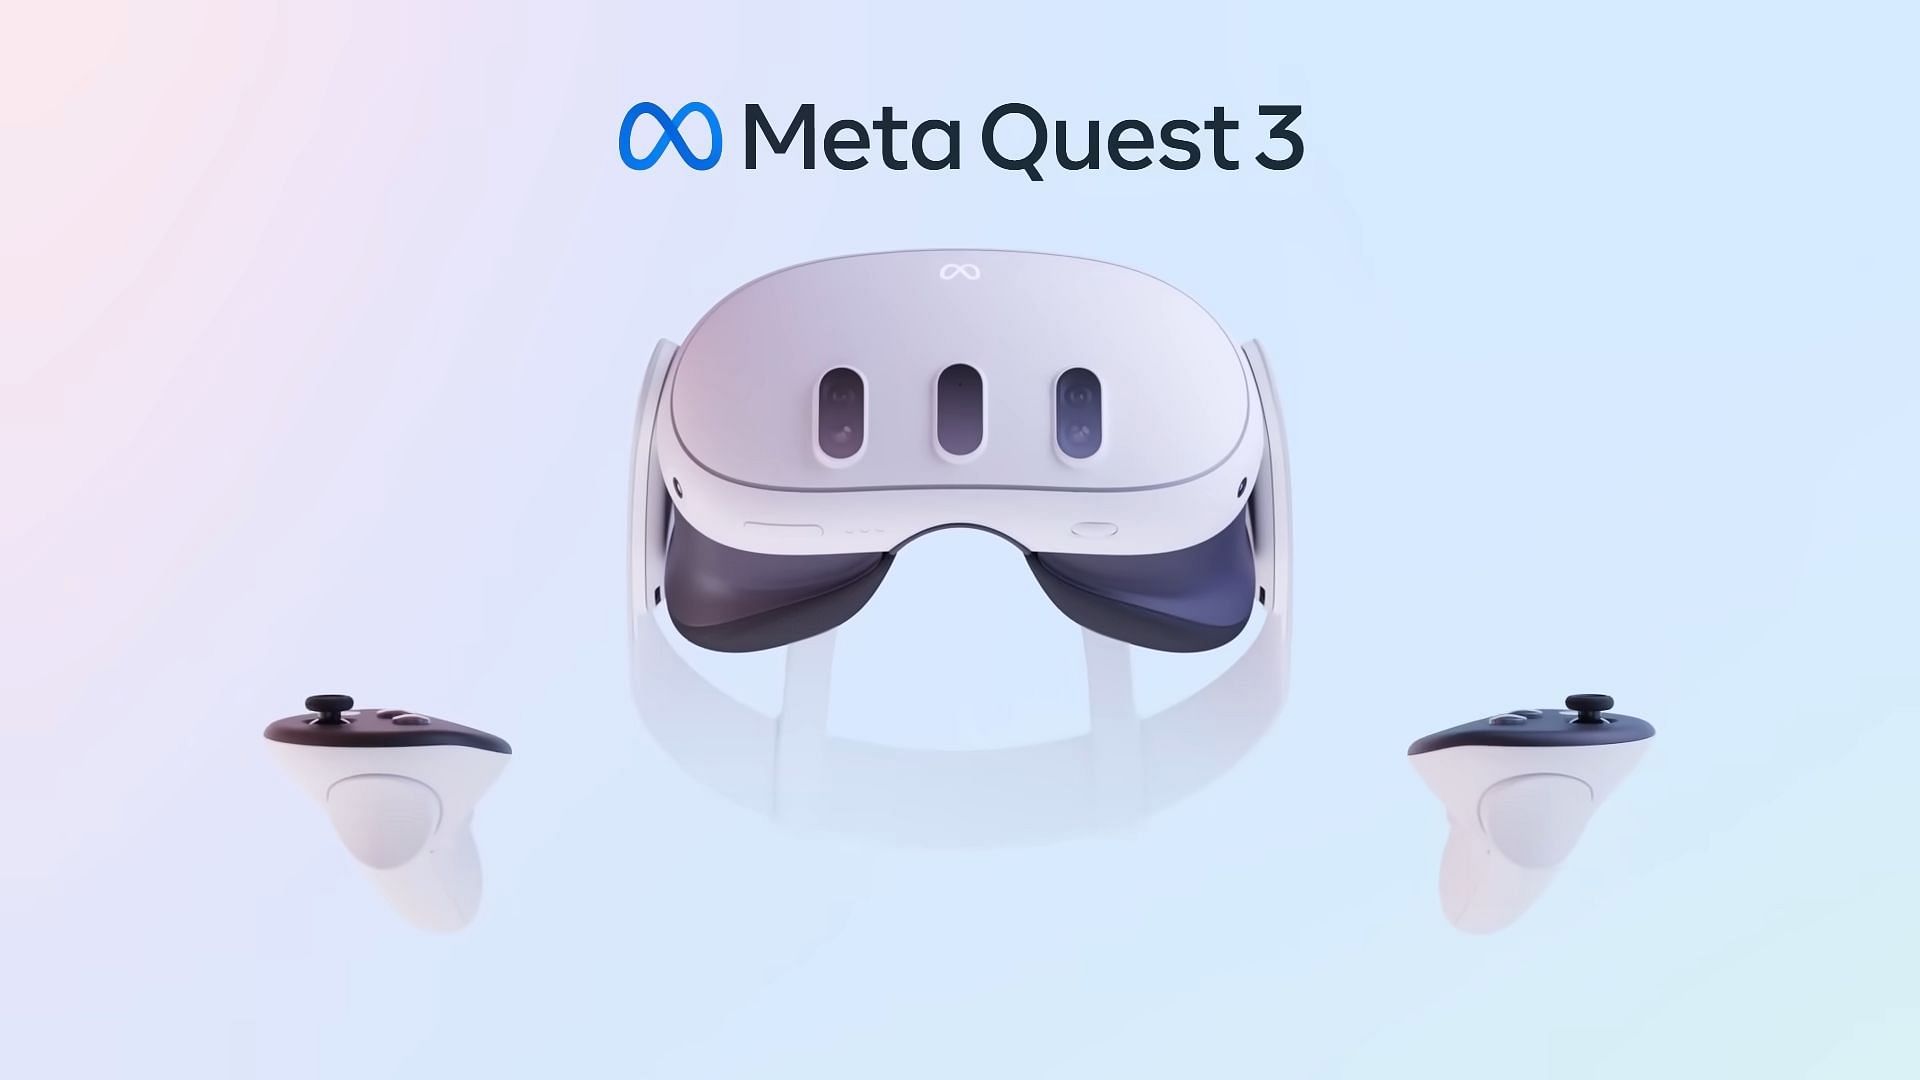 The Meta Quest 3